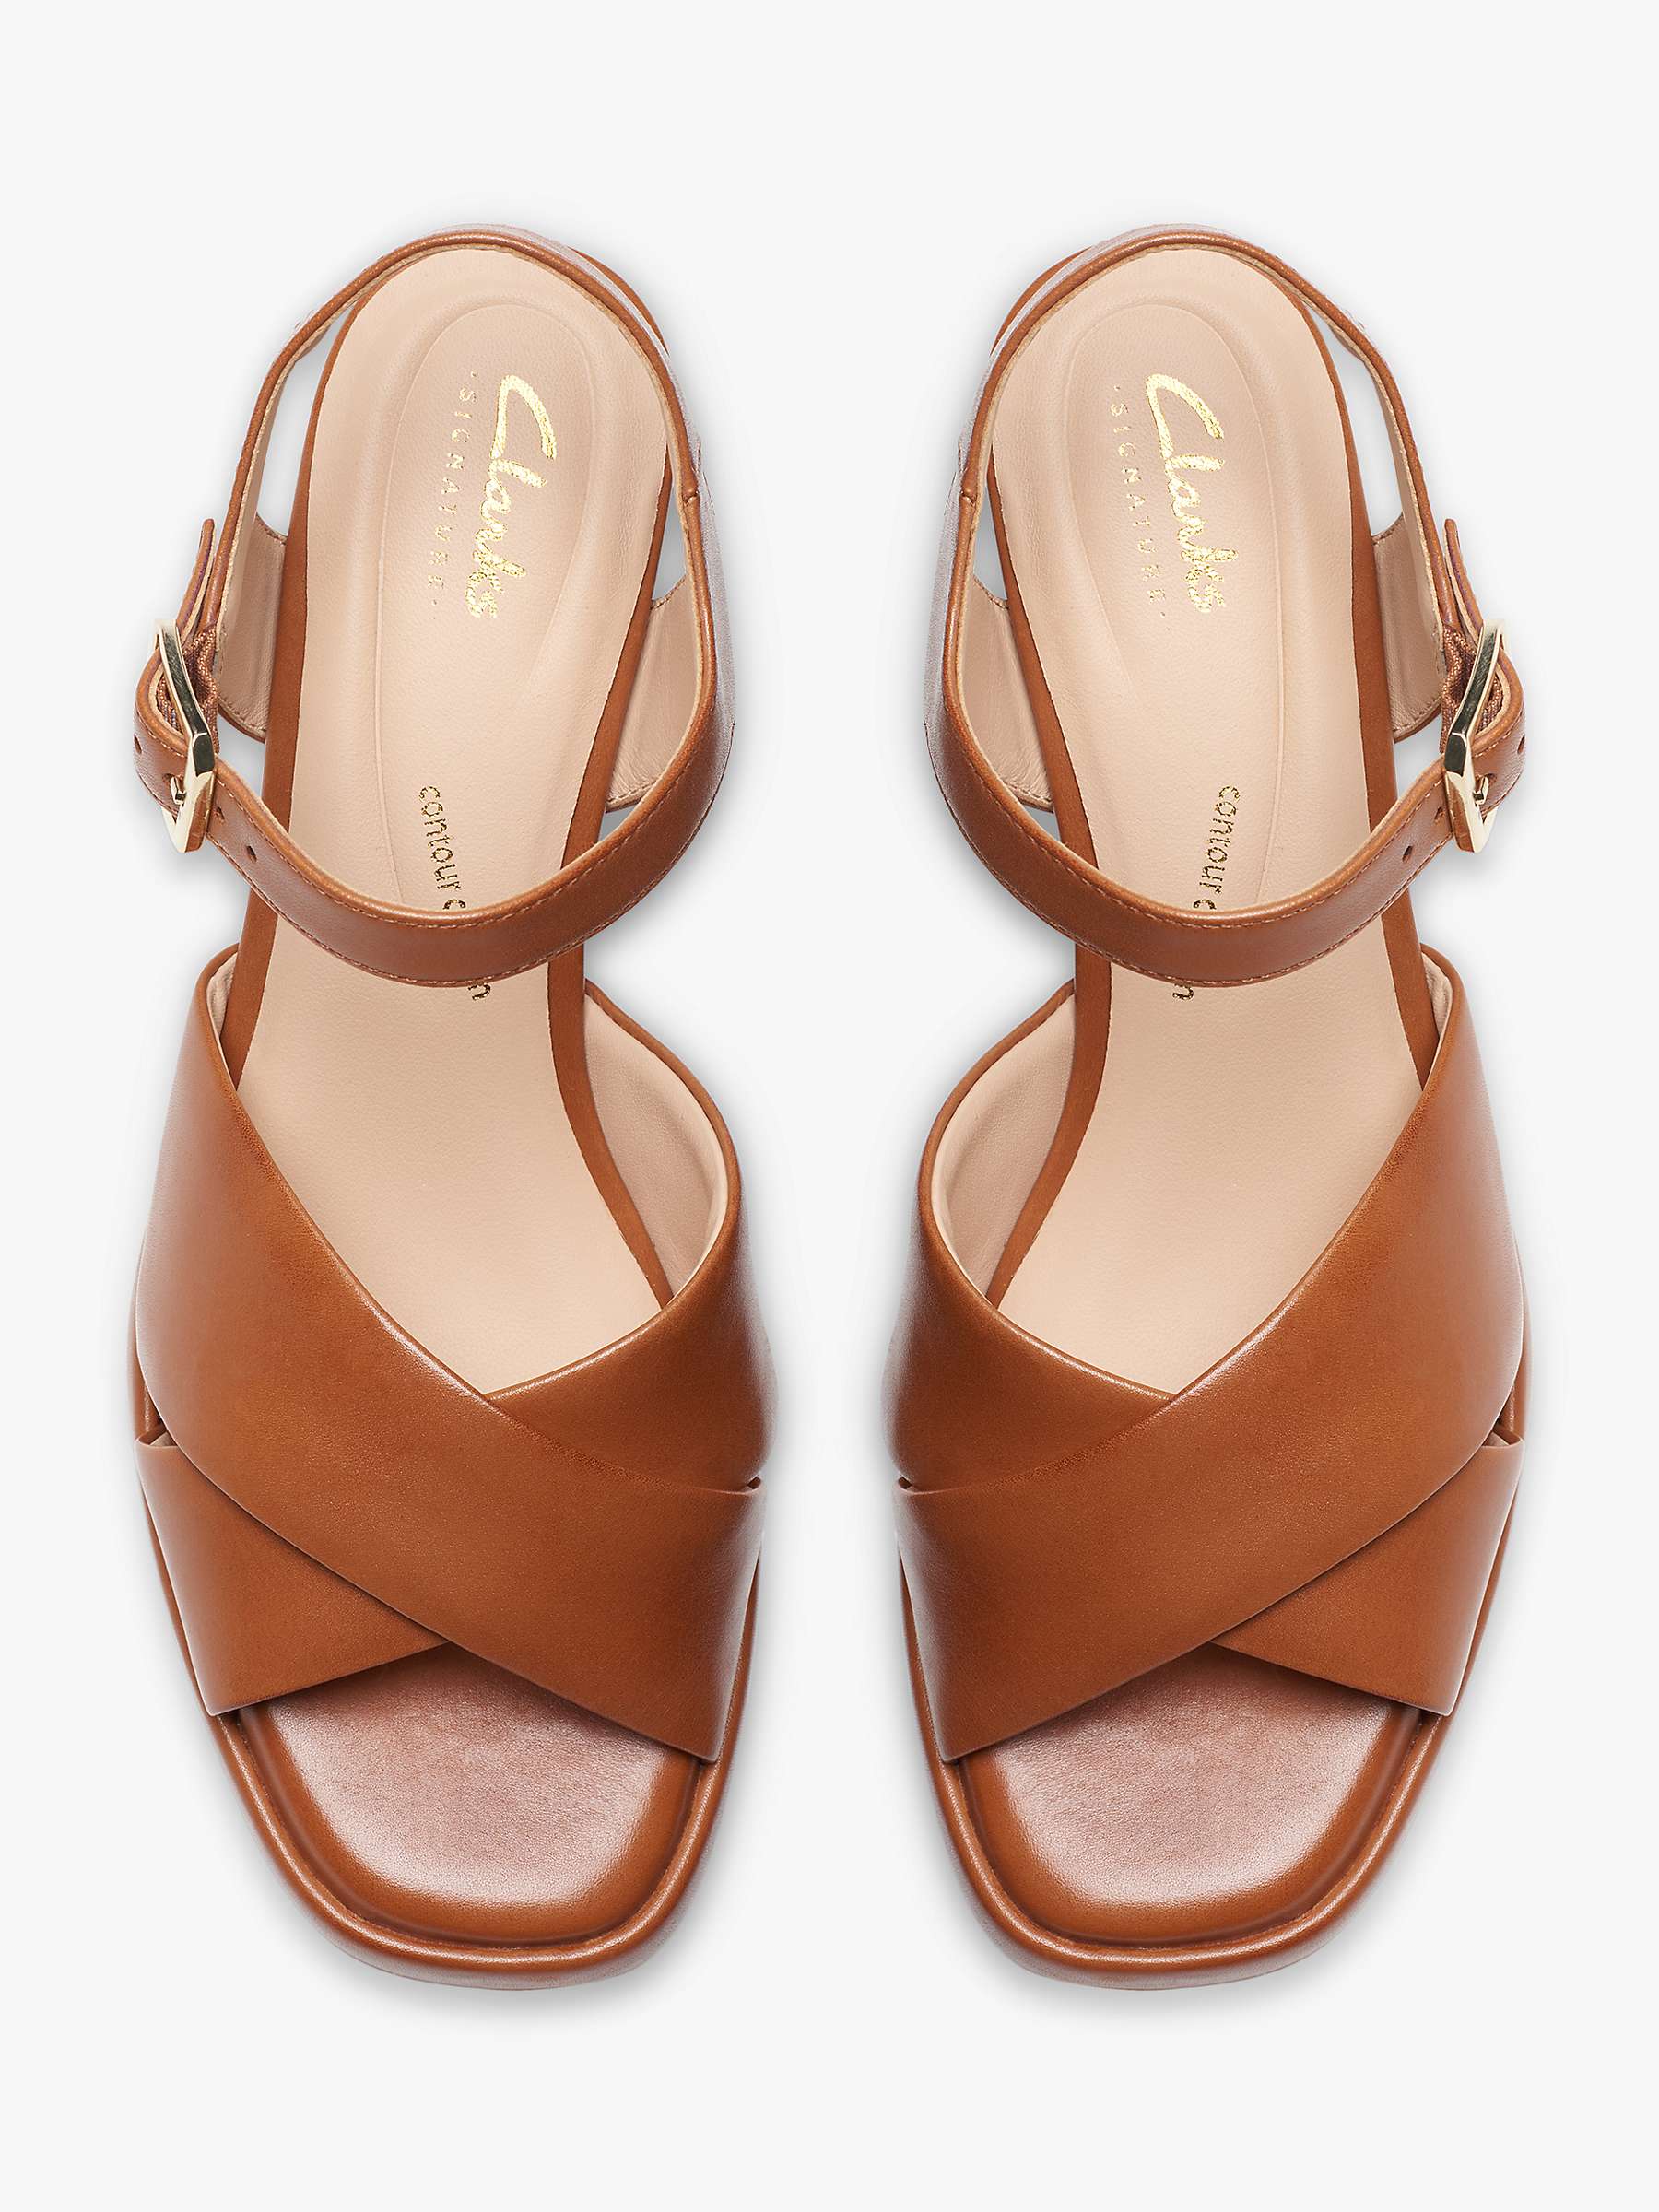 Buy Clarks Ritzy 75 Faye Leather Block Heel Sandals, Tan Online at johnlewis.com